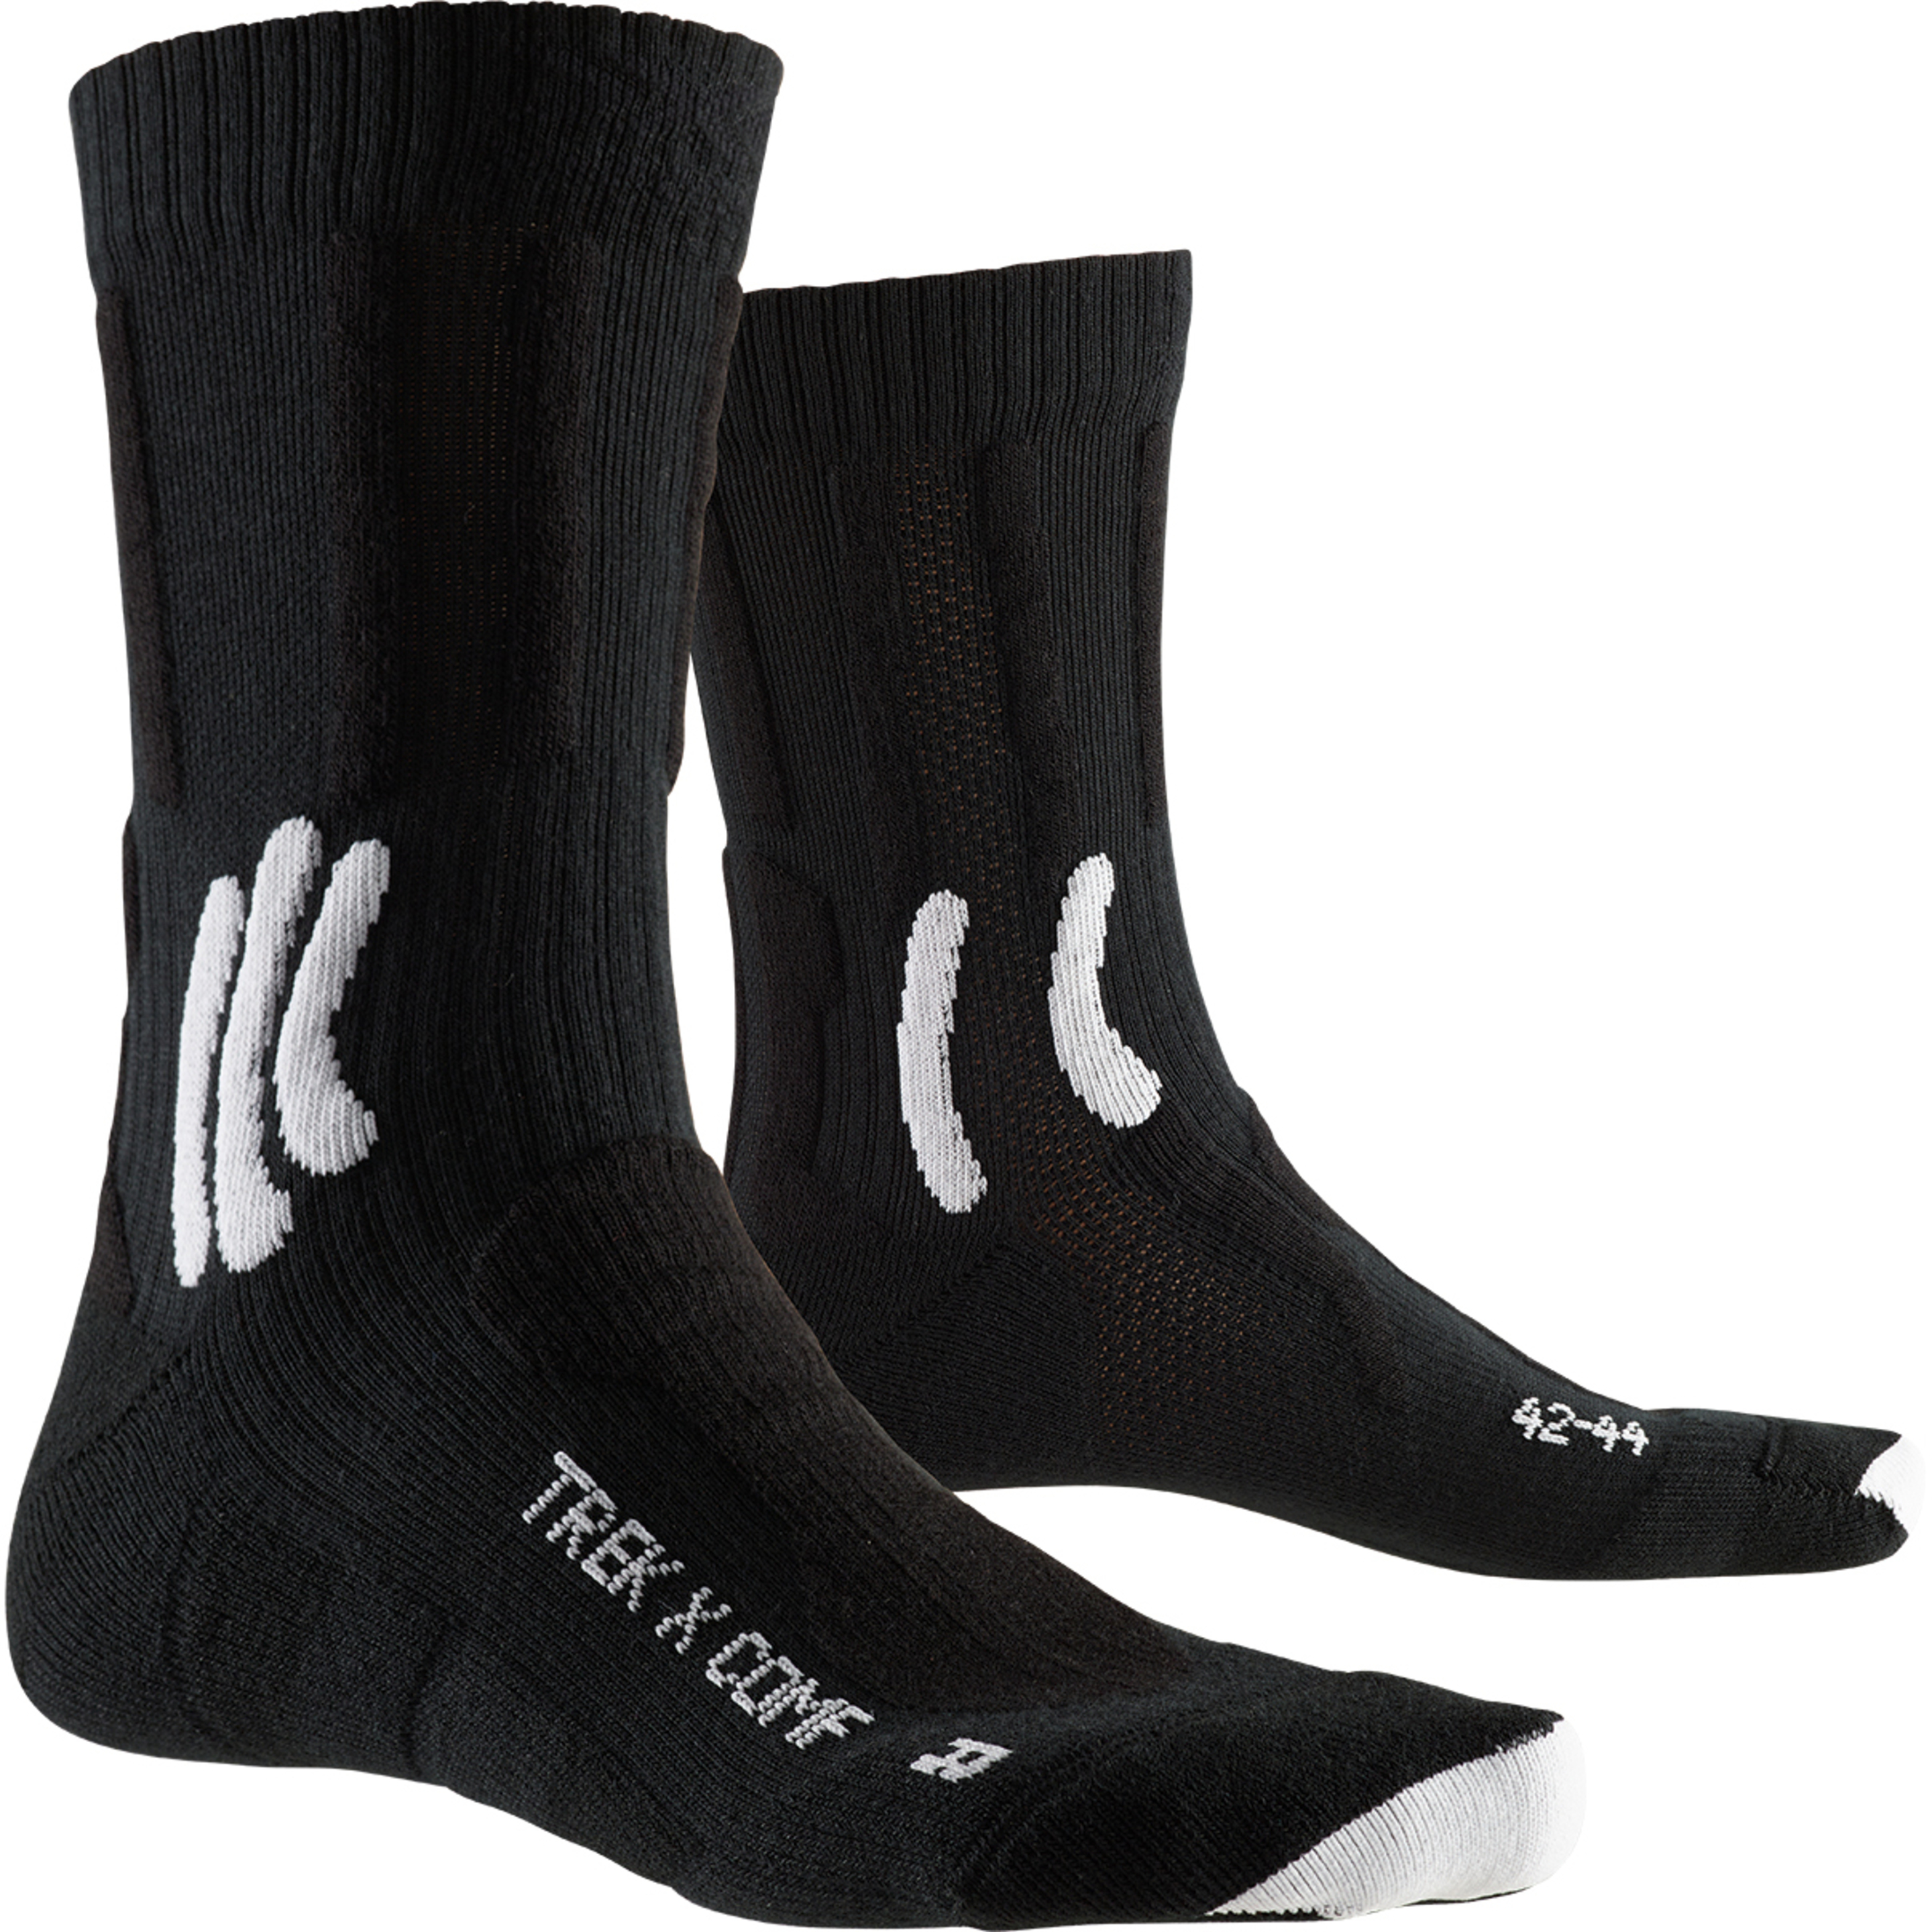 Calcetin Trek X Comf (Multiplo 3 Uds) X-socks